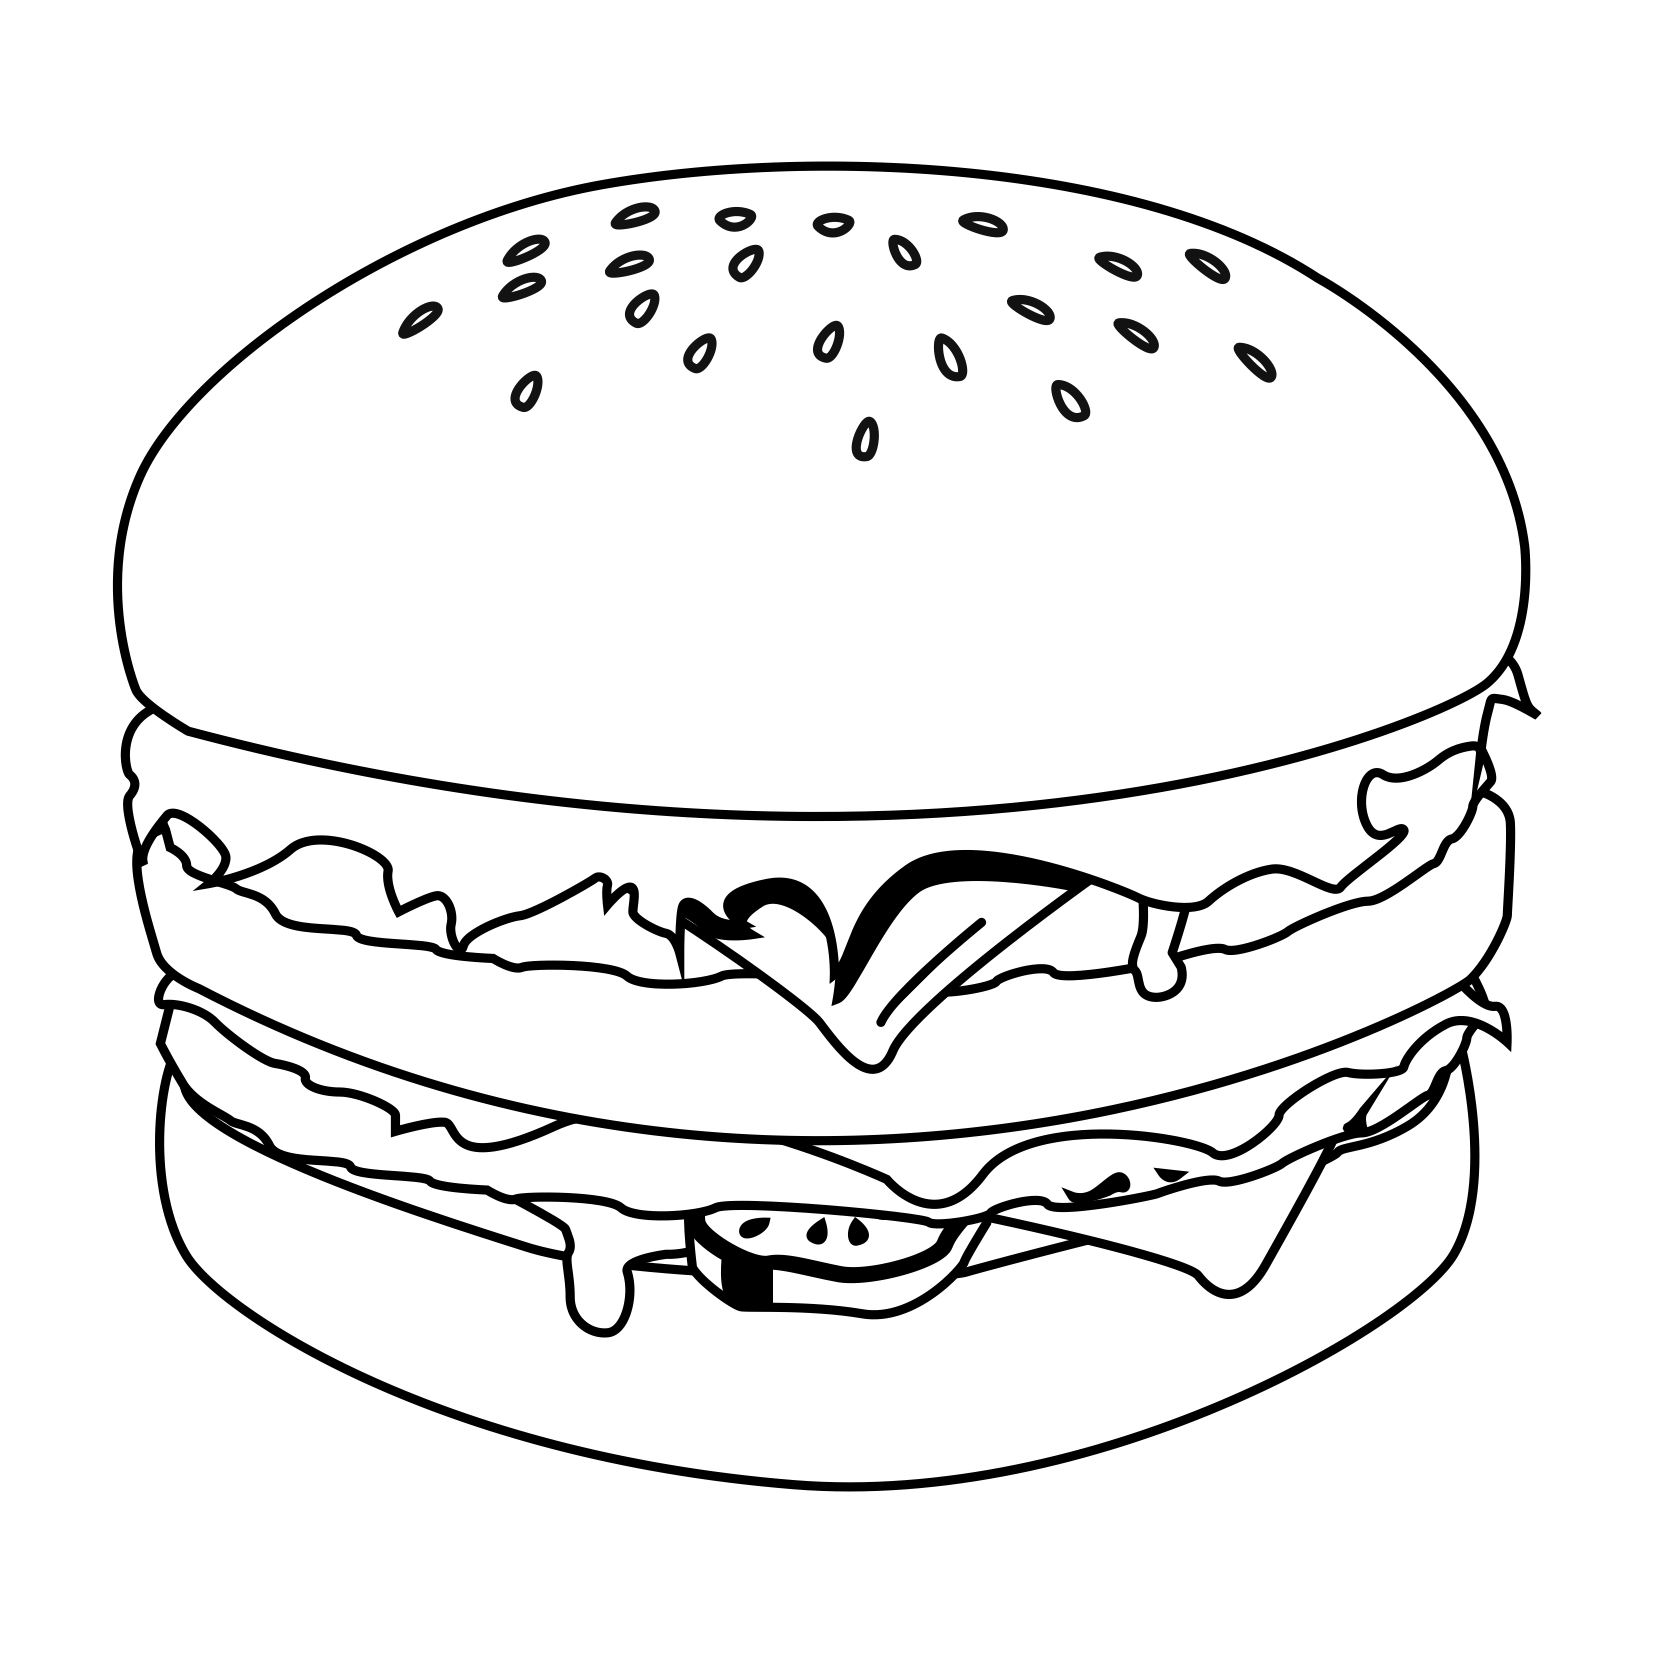 Total 97+ imagem desenhos de hambúrguer para colorir - br.thptnganamst ...